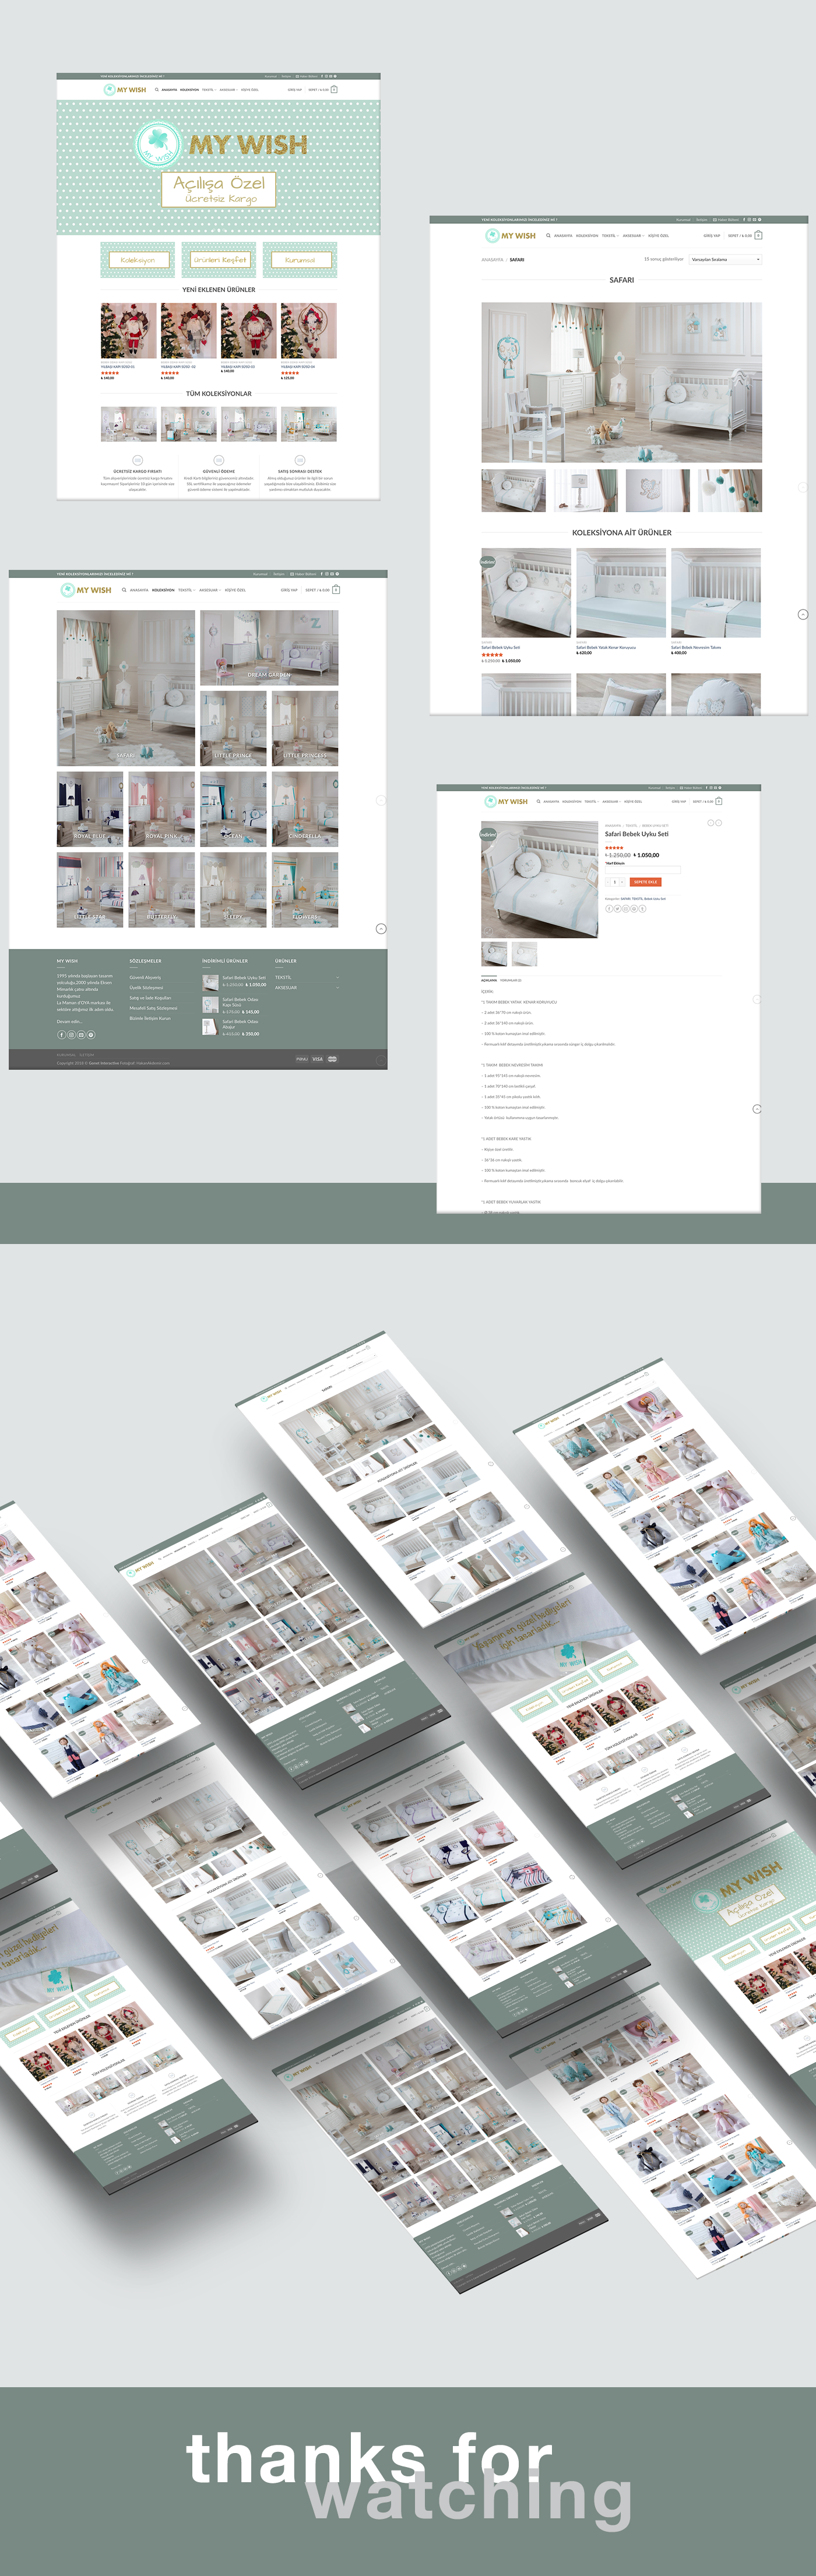 Webdesign Website e-commerce graphicdesign Mockup e-commercesite wordpress minimalist